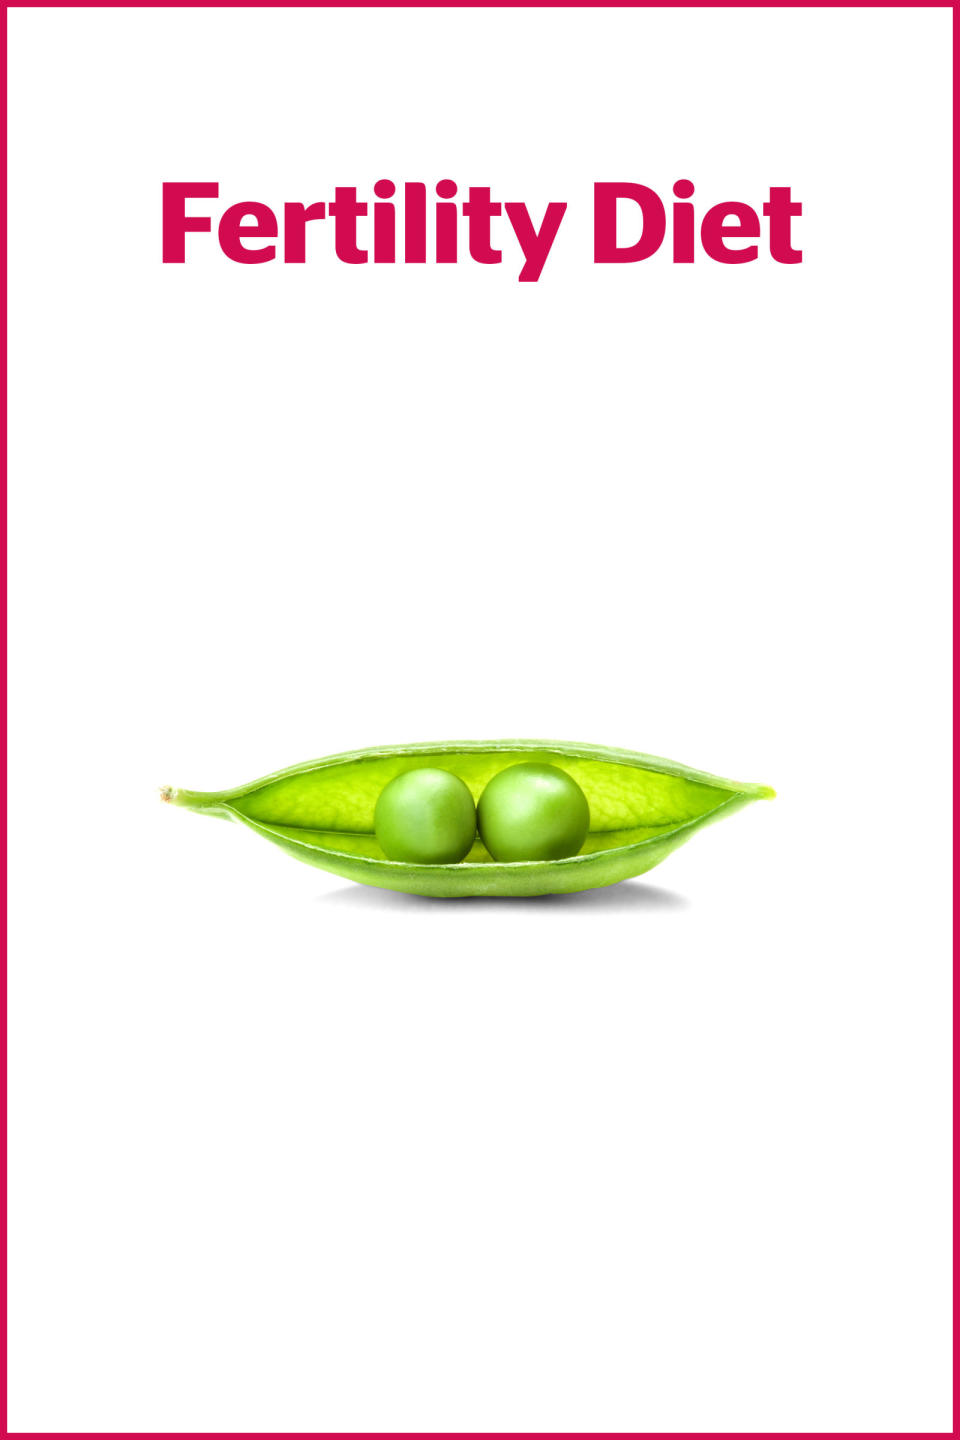 14) Fertility Diet